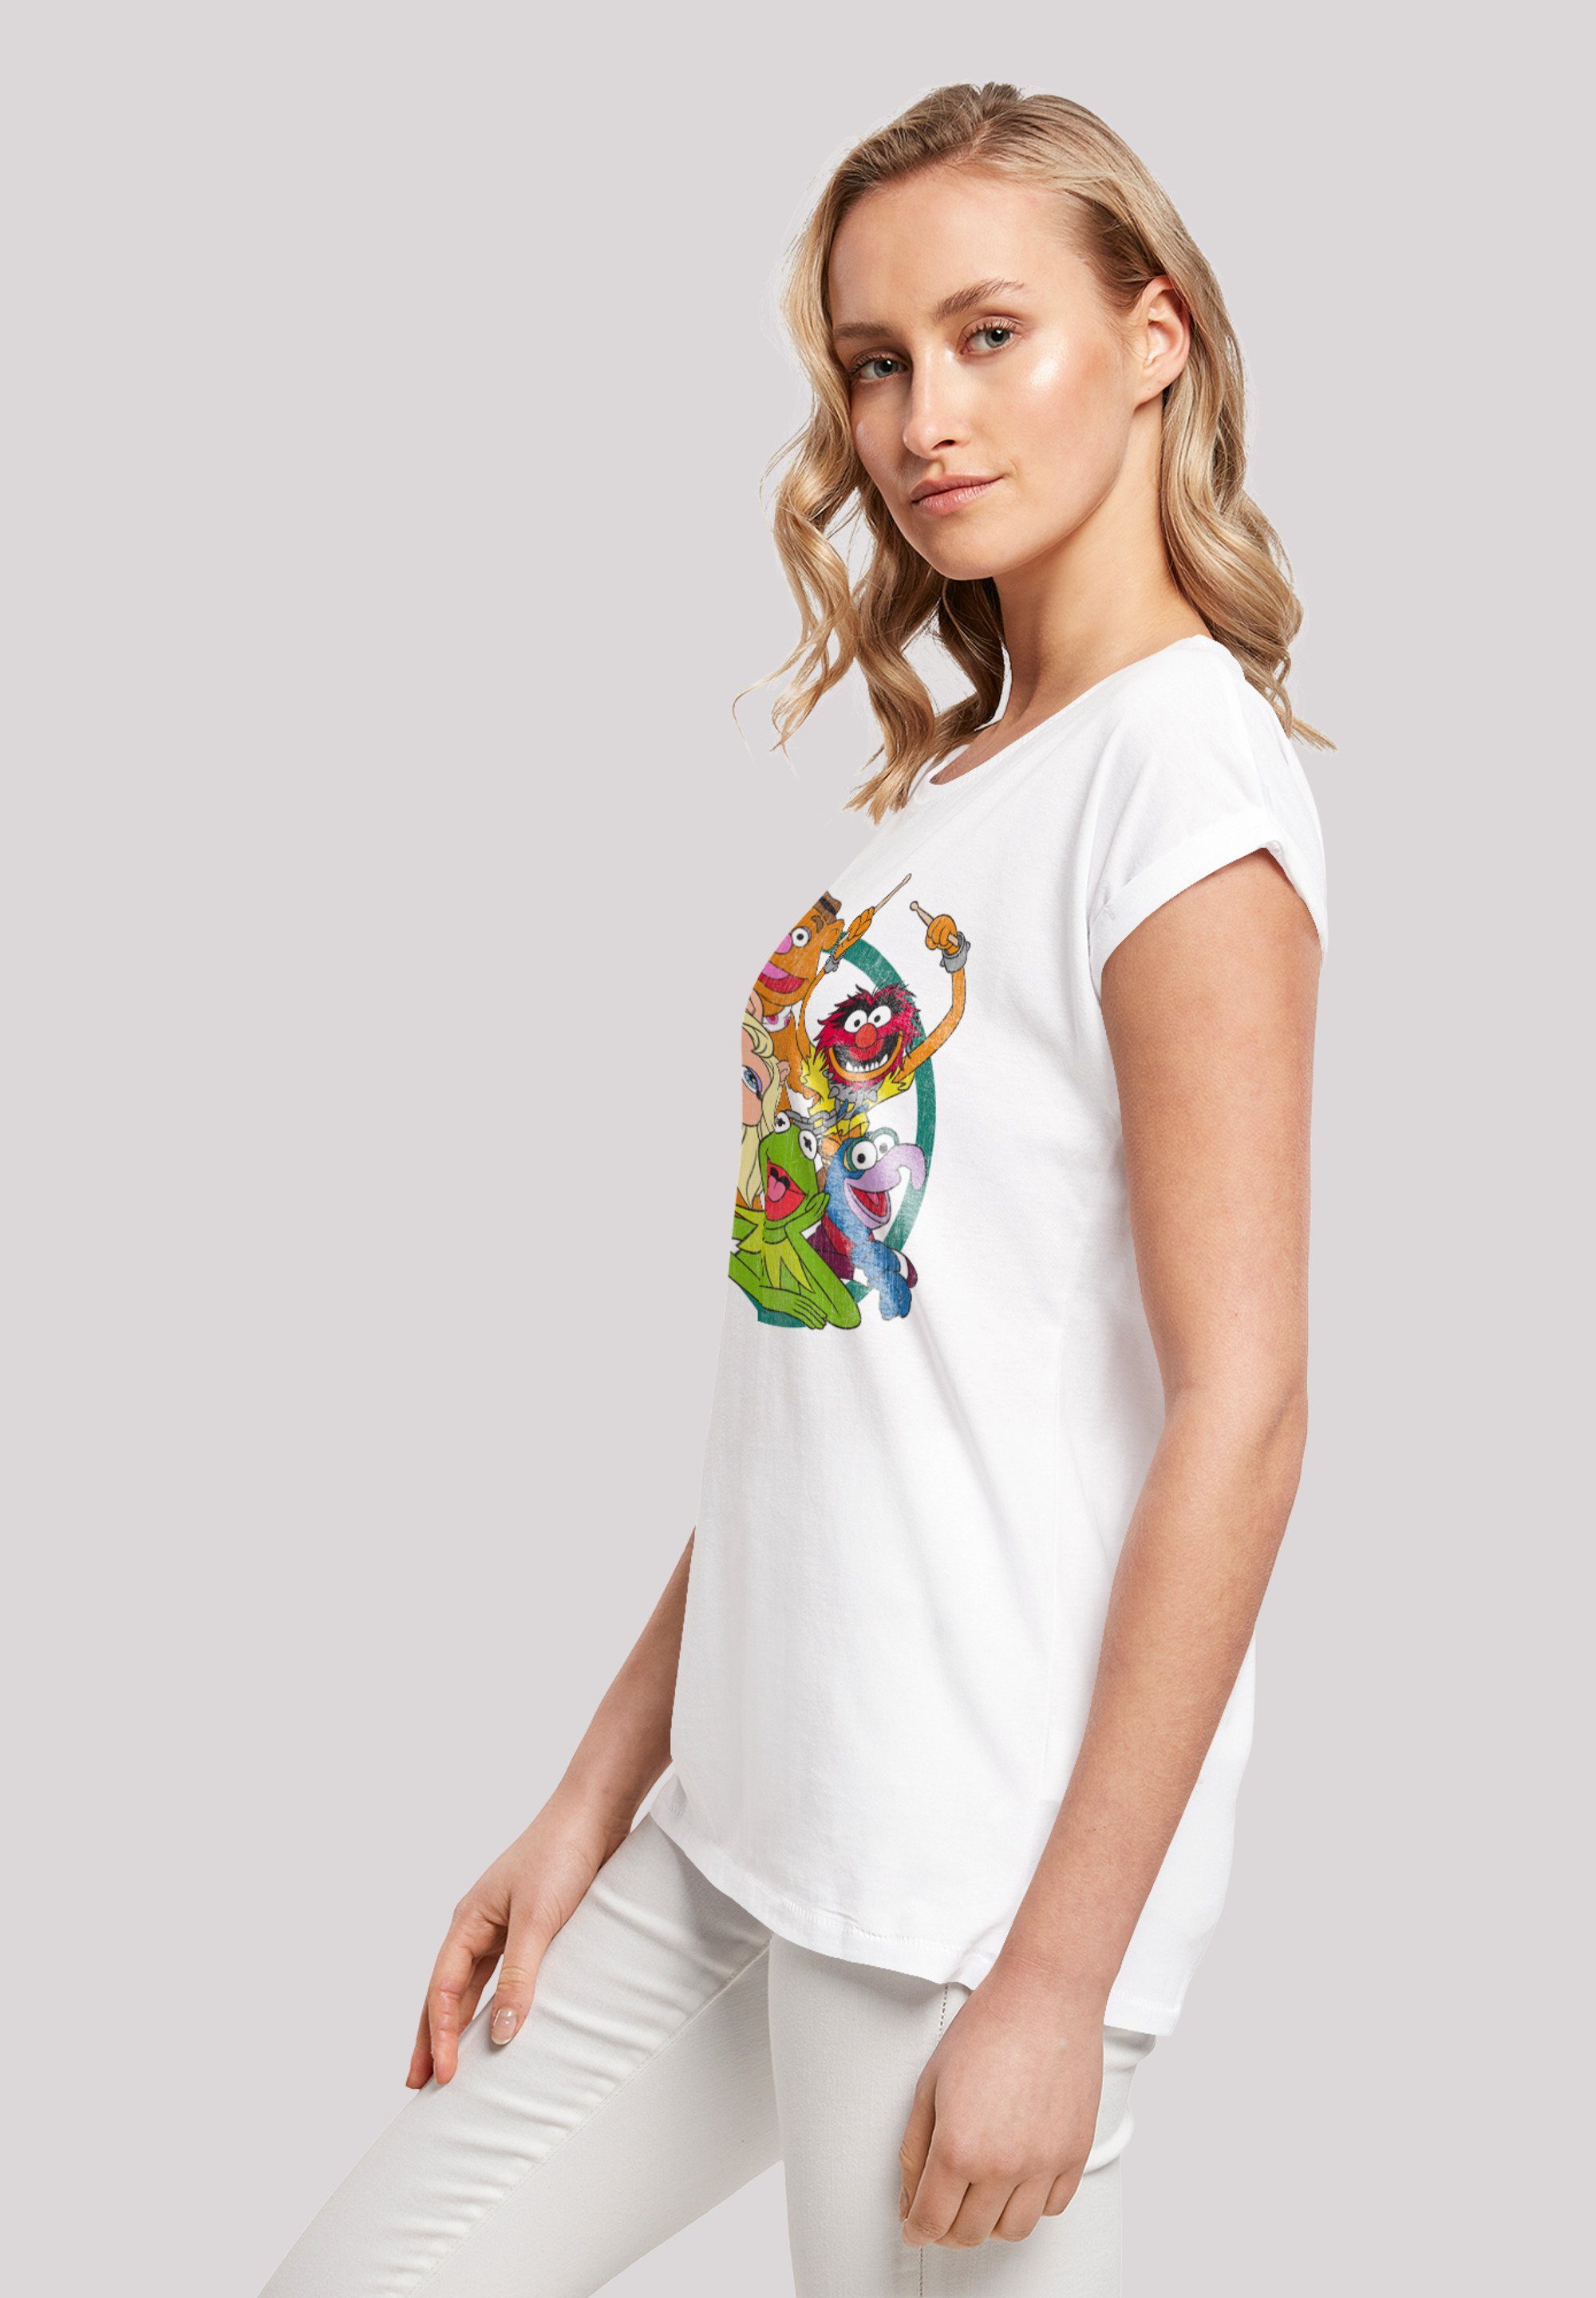 Muppets Group T-Shirt Circle Disney weiß Print Die F4NT4STIC